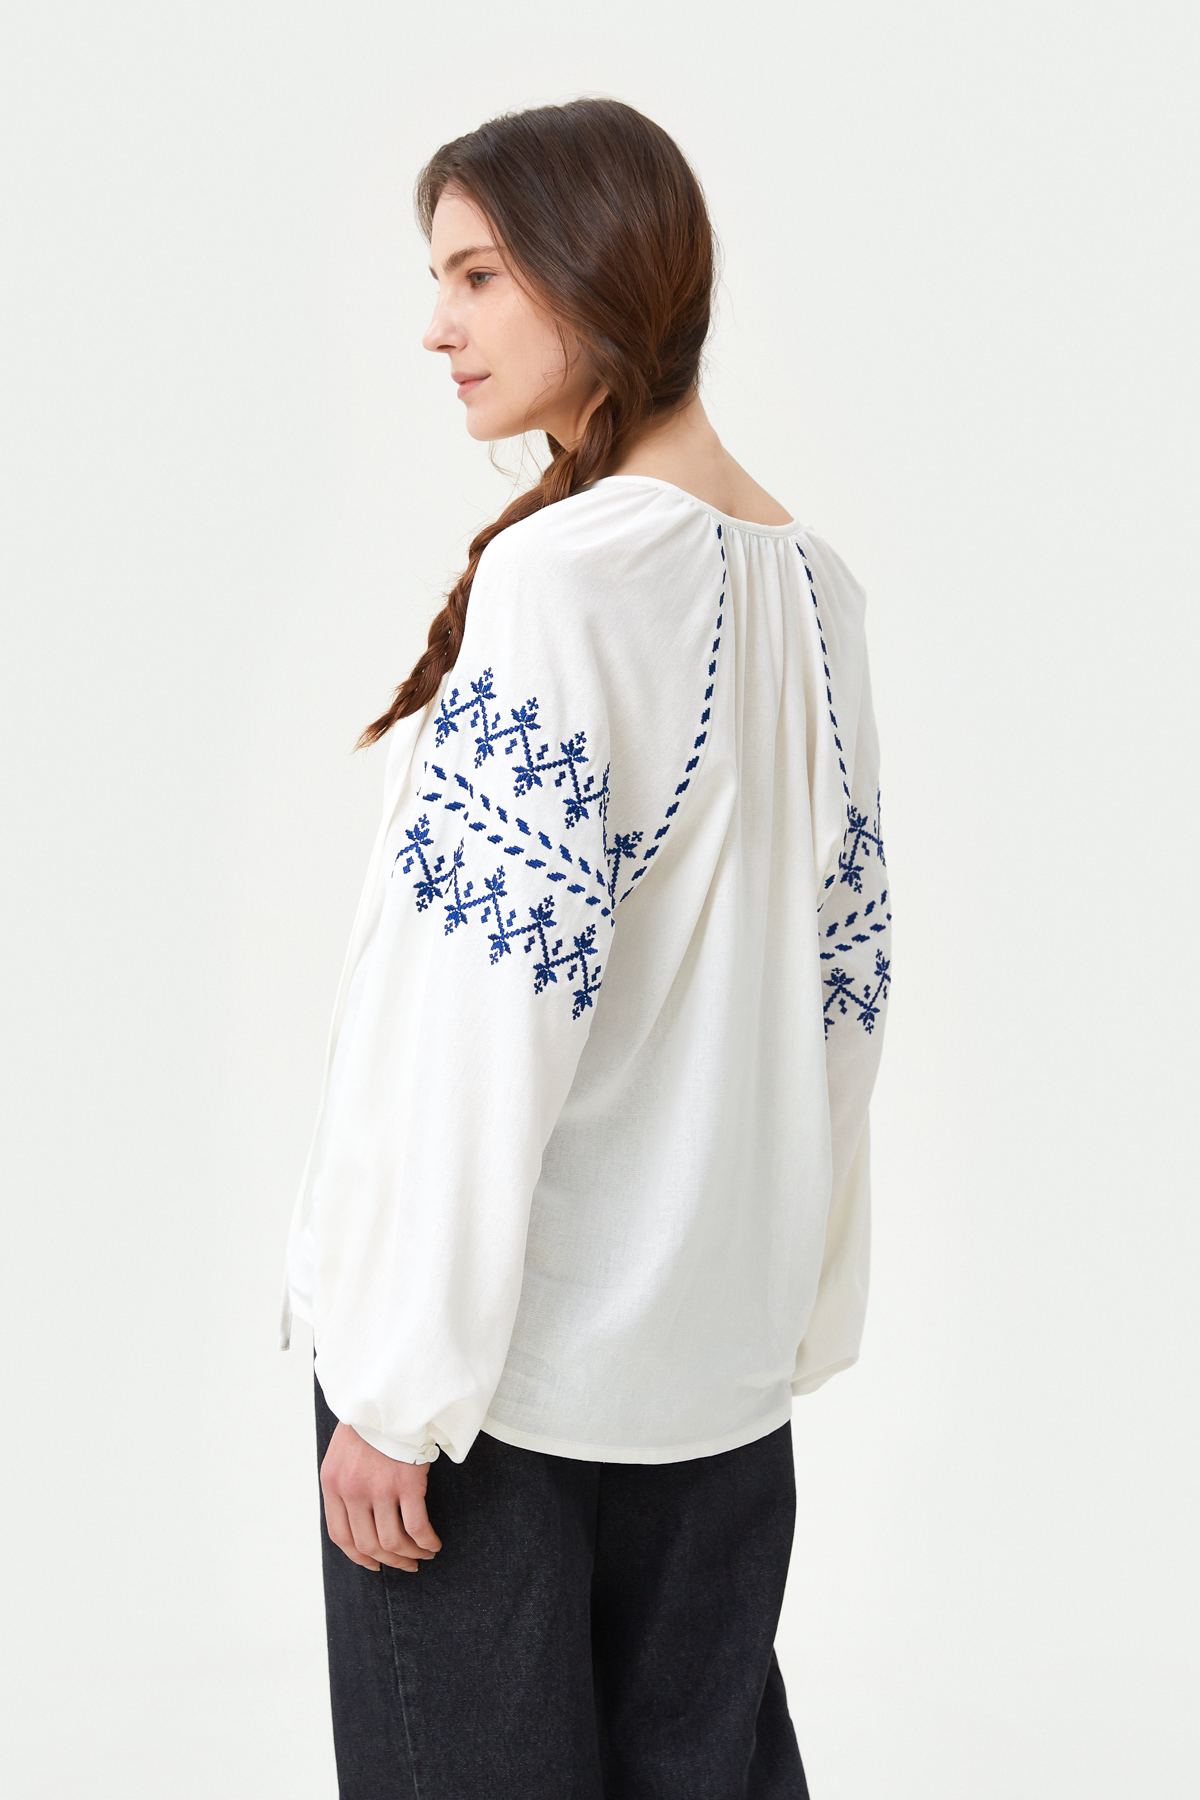 Milky linen vyshyvanka shirt with zigzags embroidery, photo 6